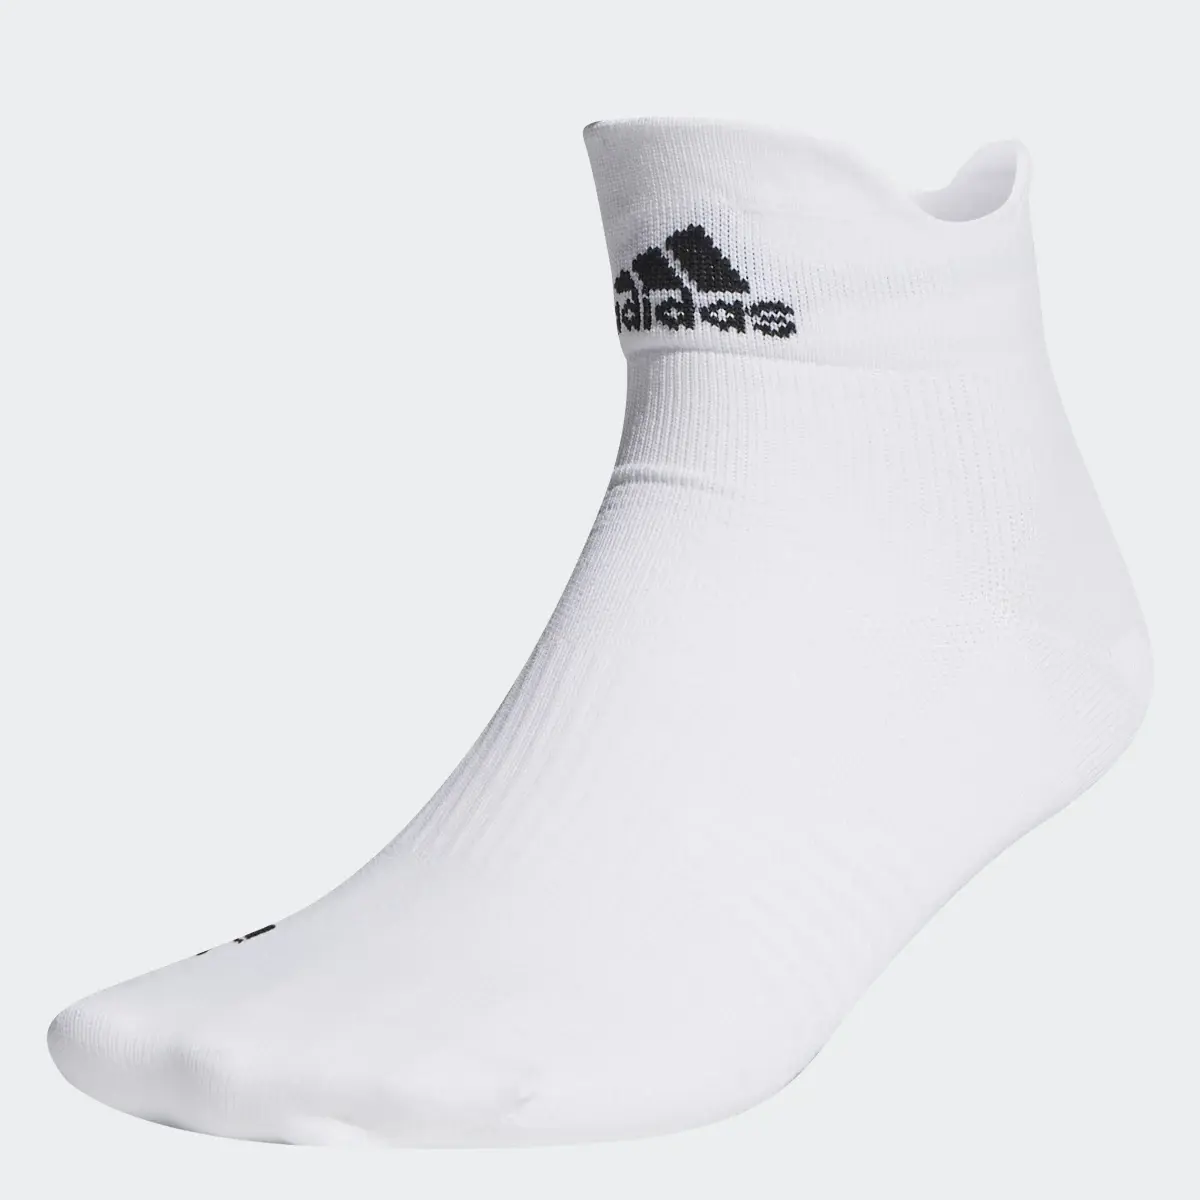 Adidas Ankle Performance Running Socks. 1